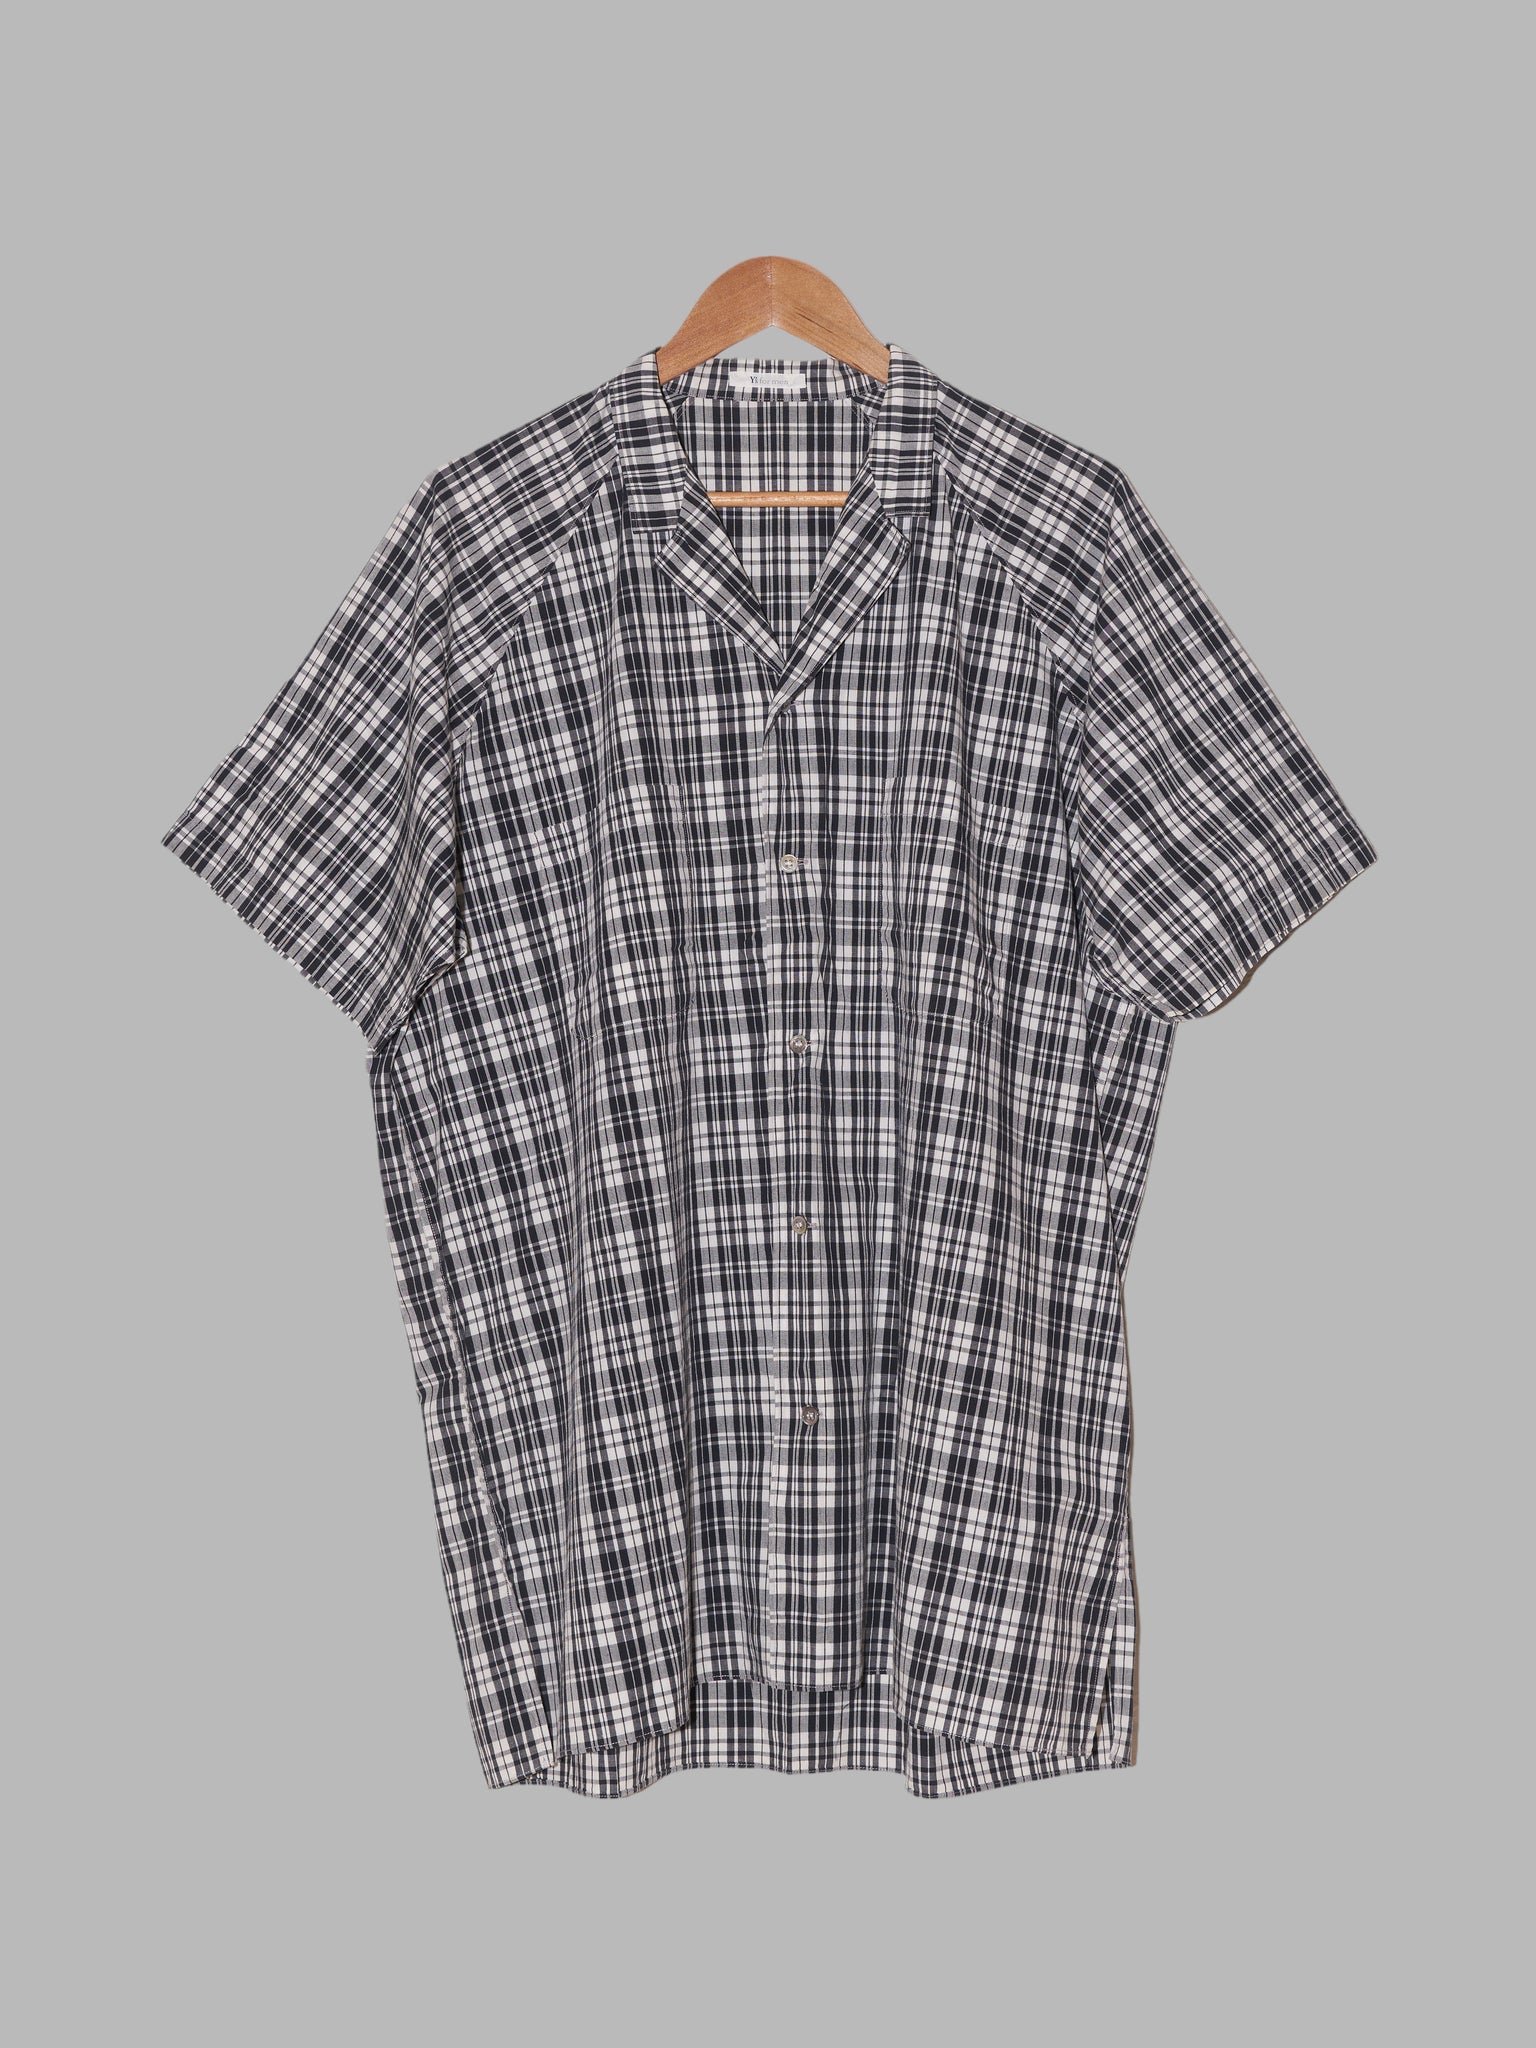 Y’s for Men 1990s Yohji Yamamoto black and white cotton check short sleeve shirt